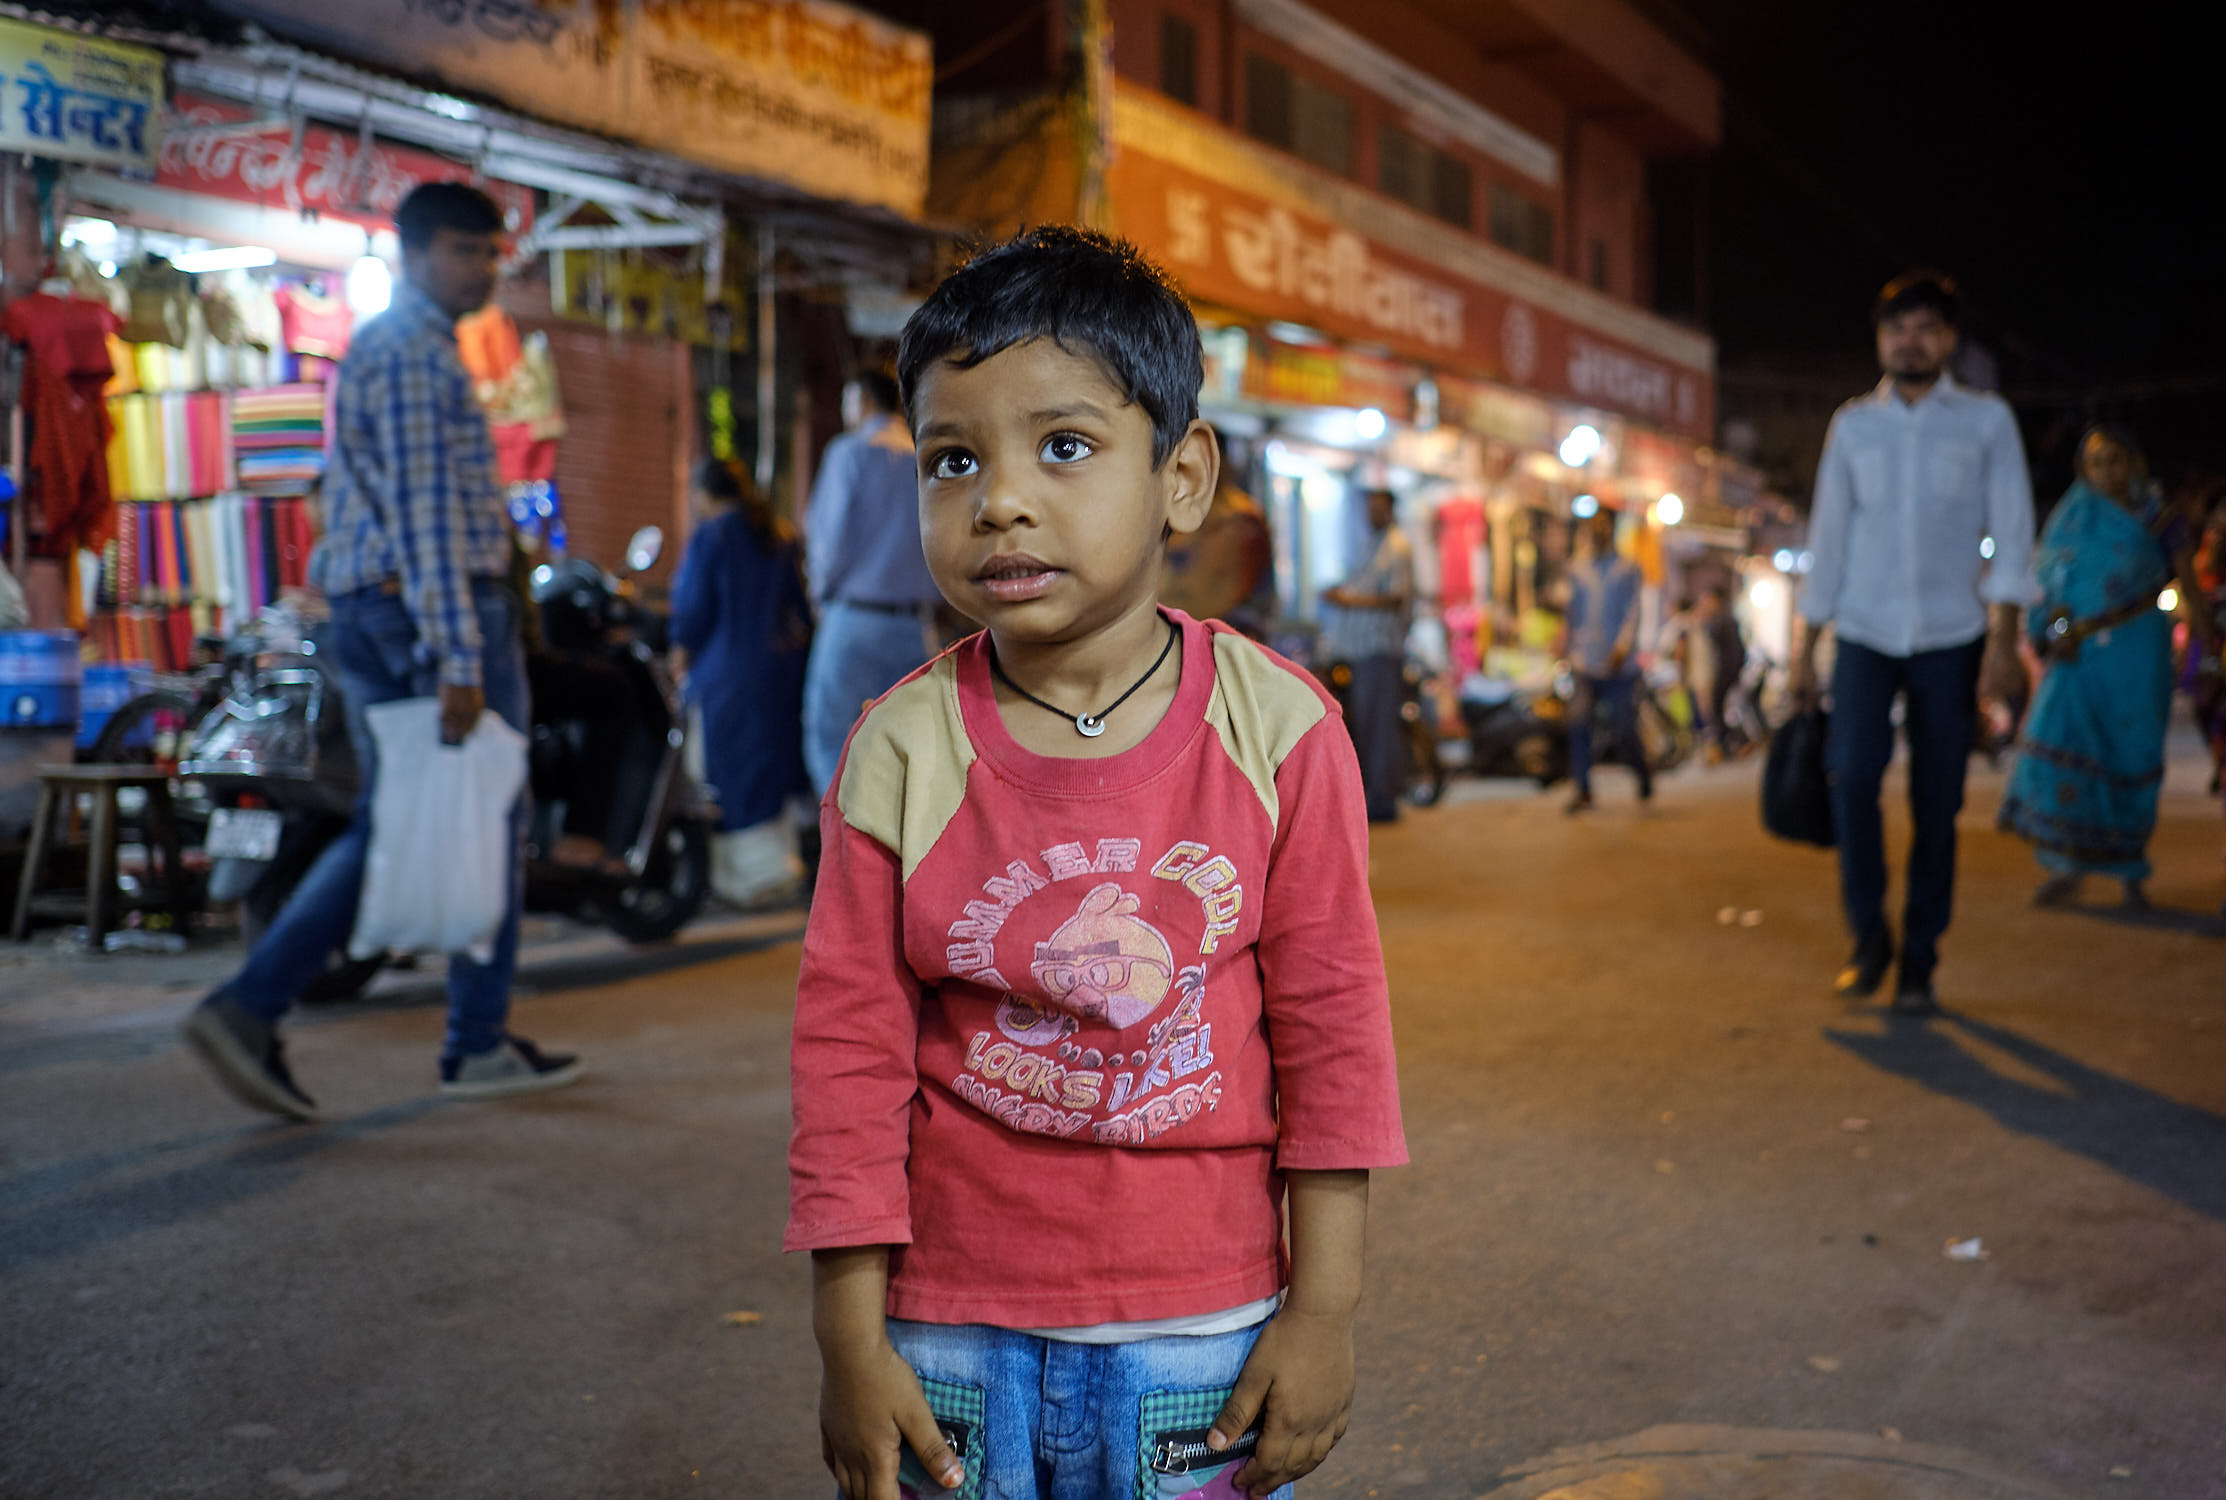 Child on street in Jaipur, India